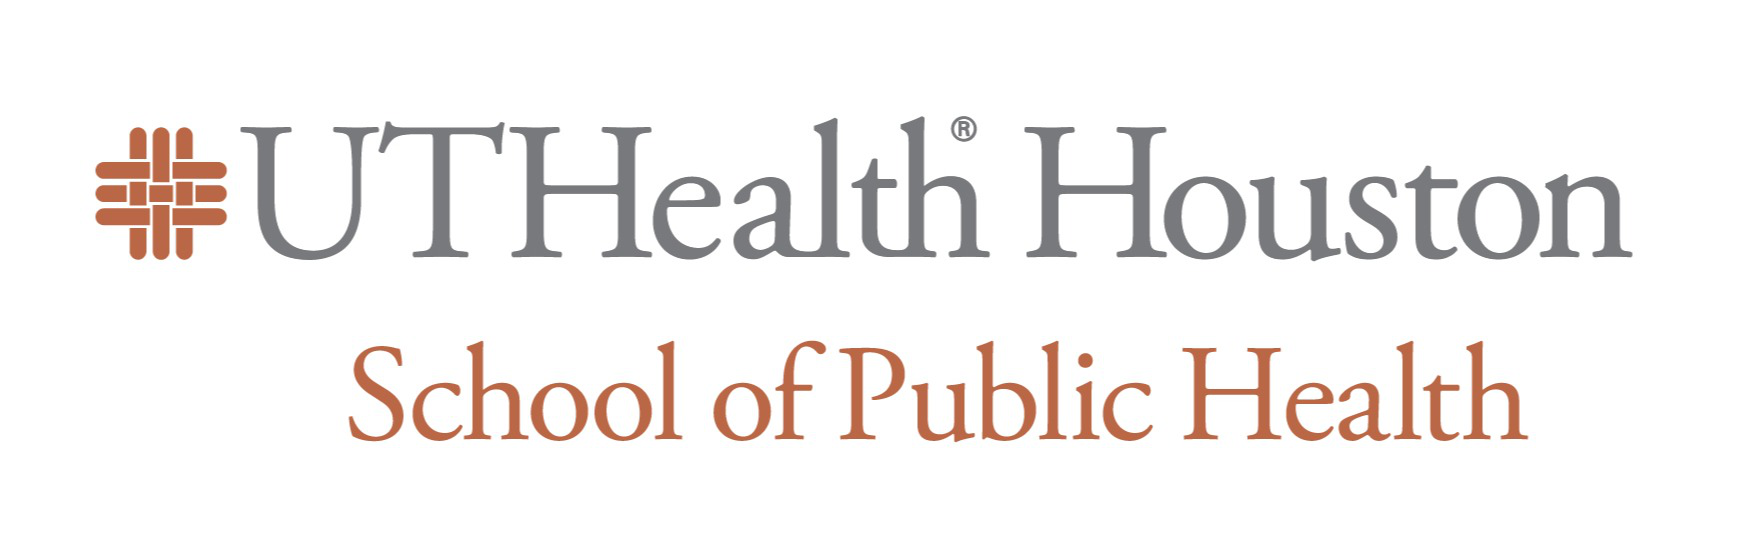 UTHealth Houston School of Public Health logo